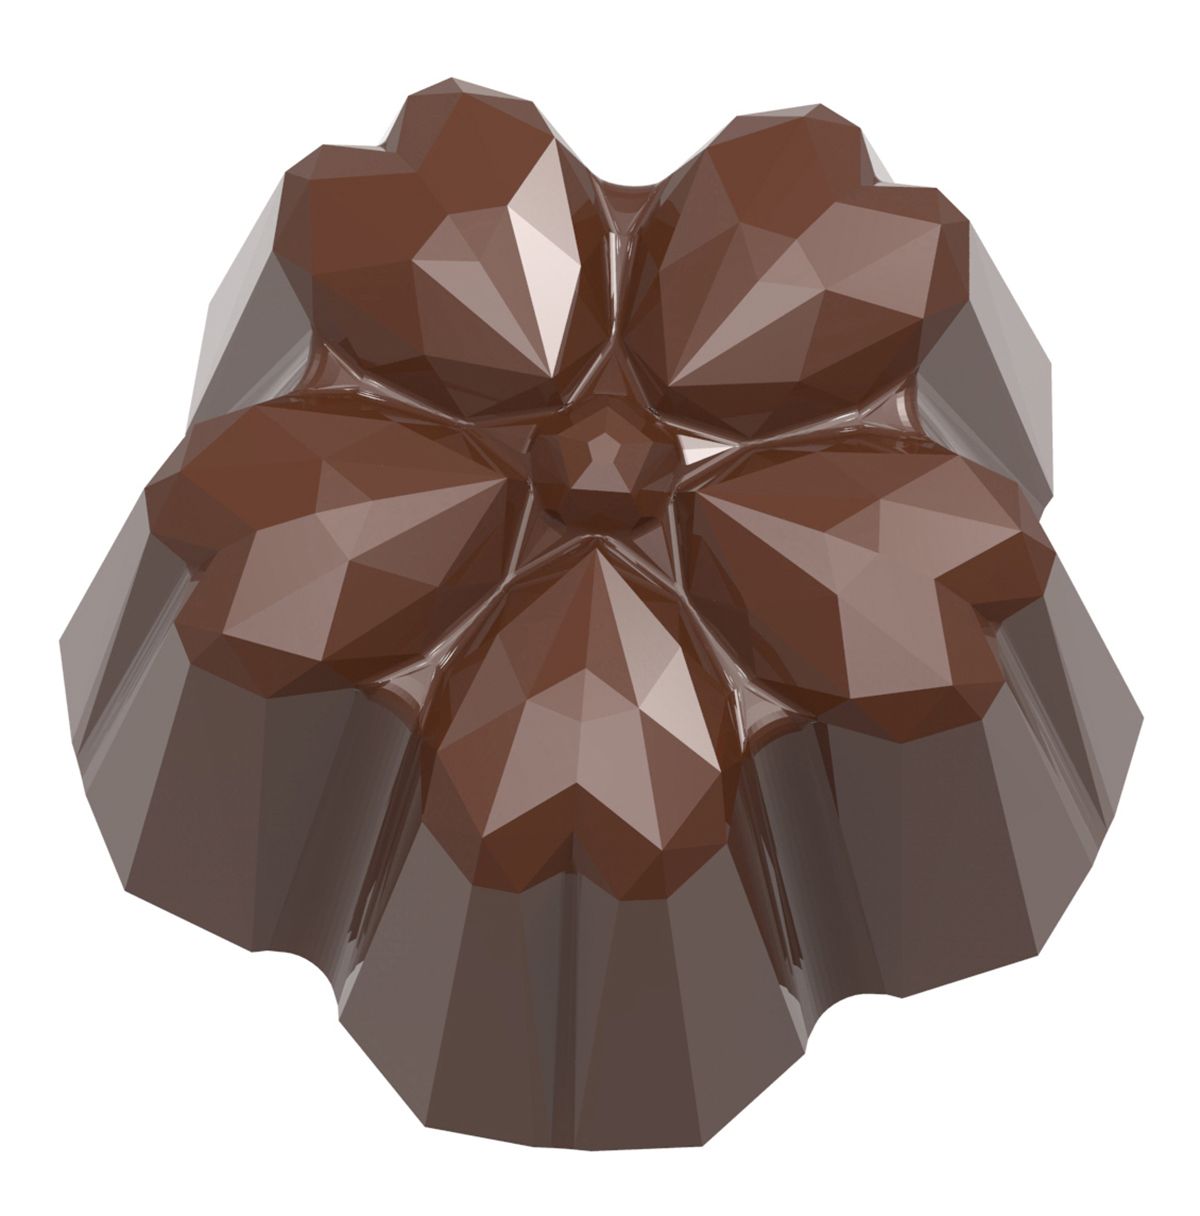 Se Professionel chokoladeform i polycarbonat - Sakura Origami - Kohei Ogata CW1918 hos BageTid.dk